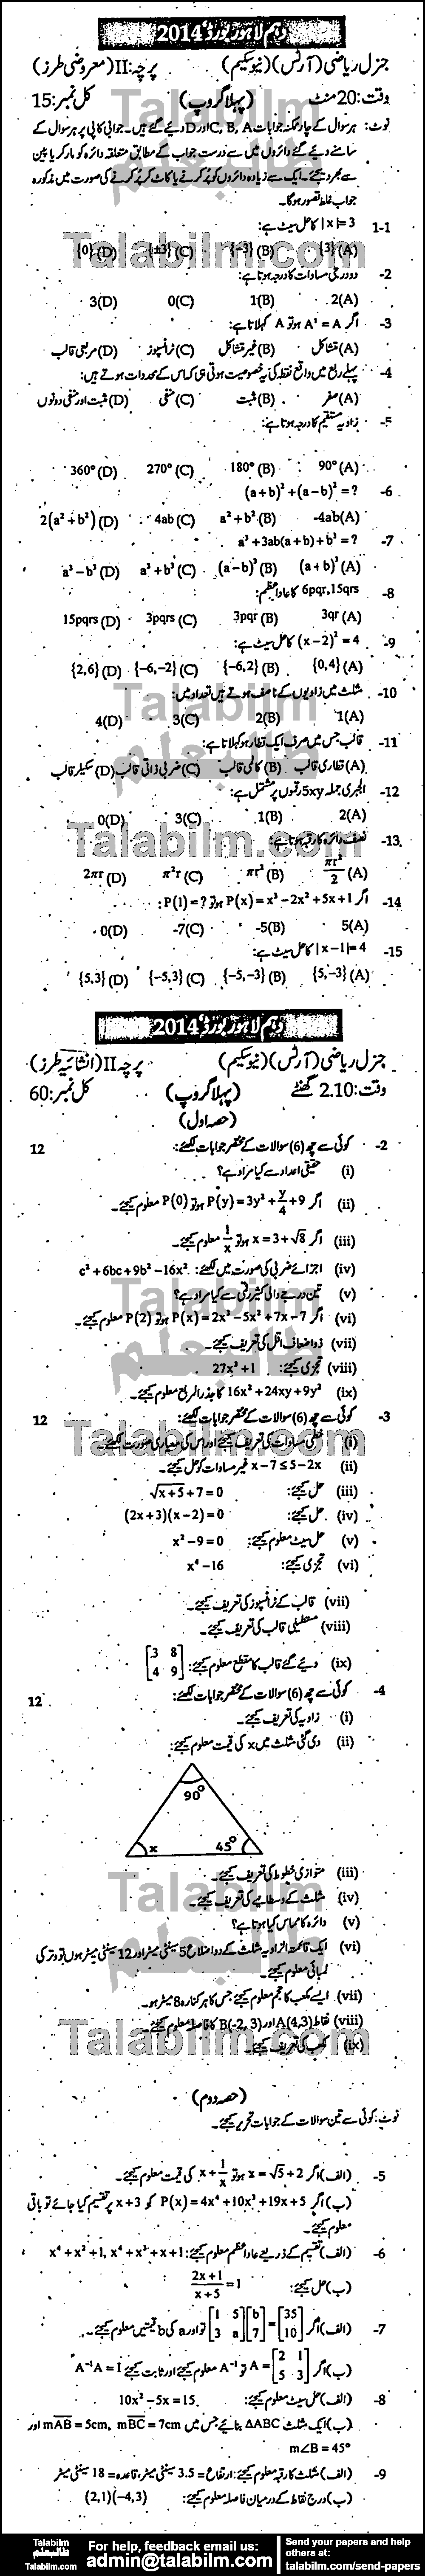 General Math 0 past paper for Urdu Medium 2014 Group-I